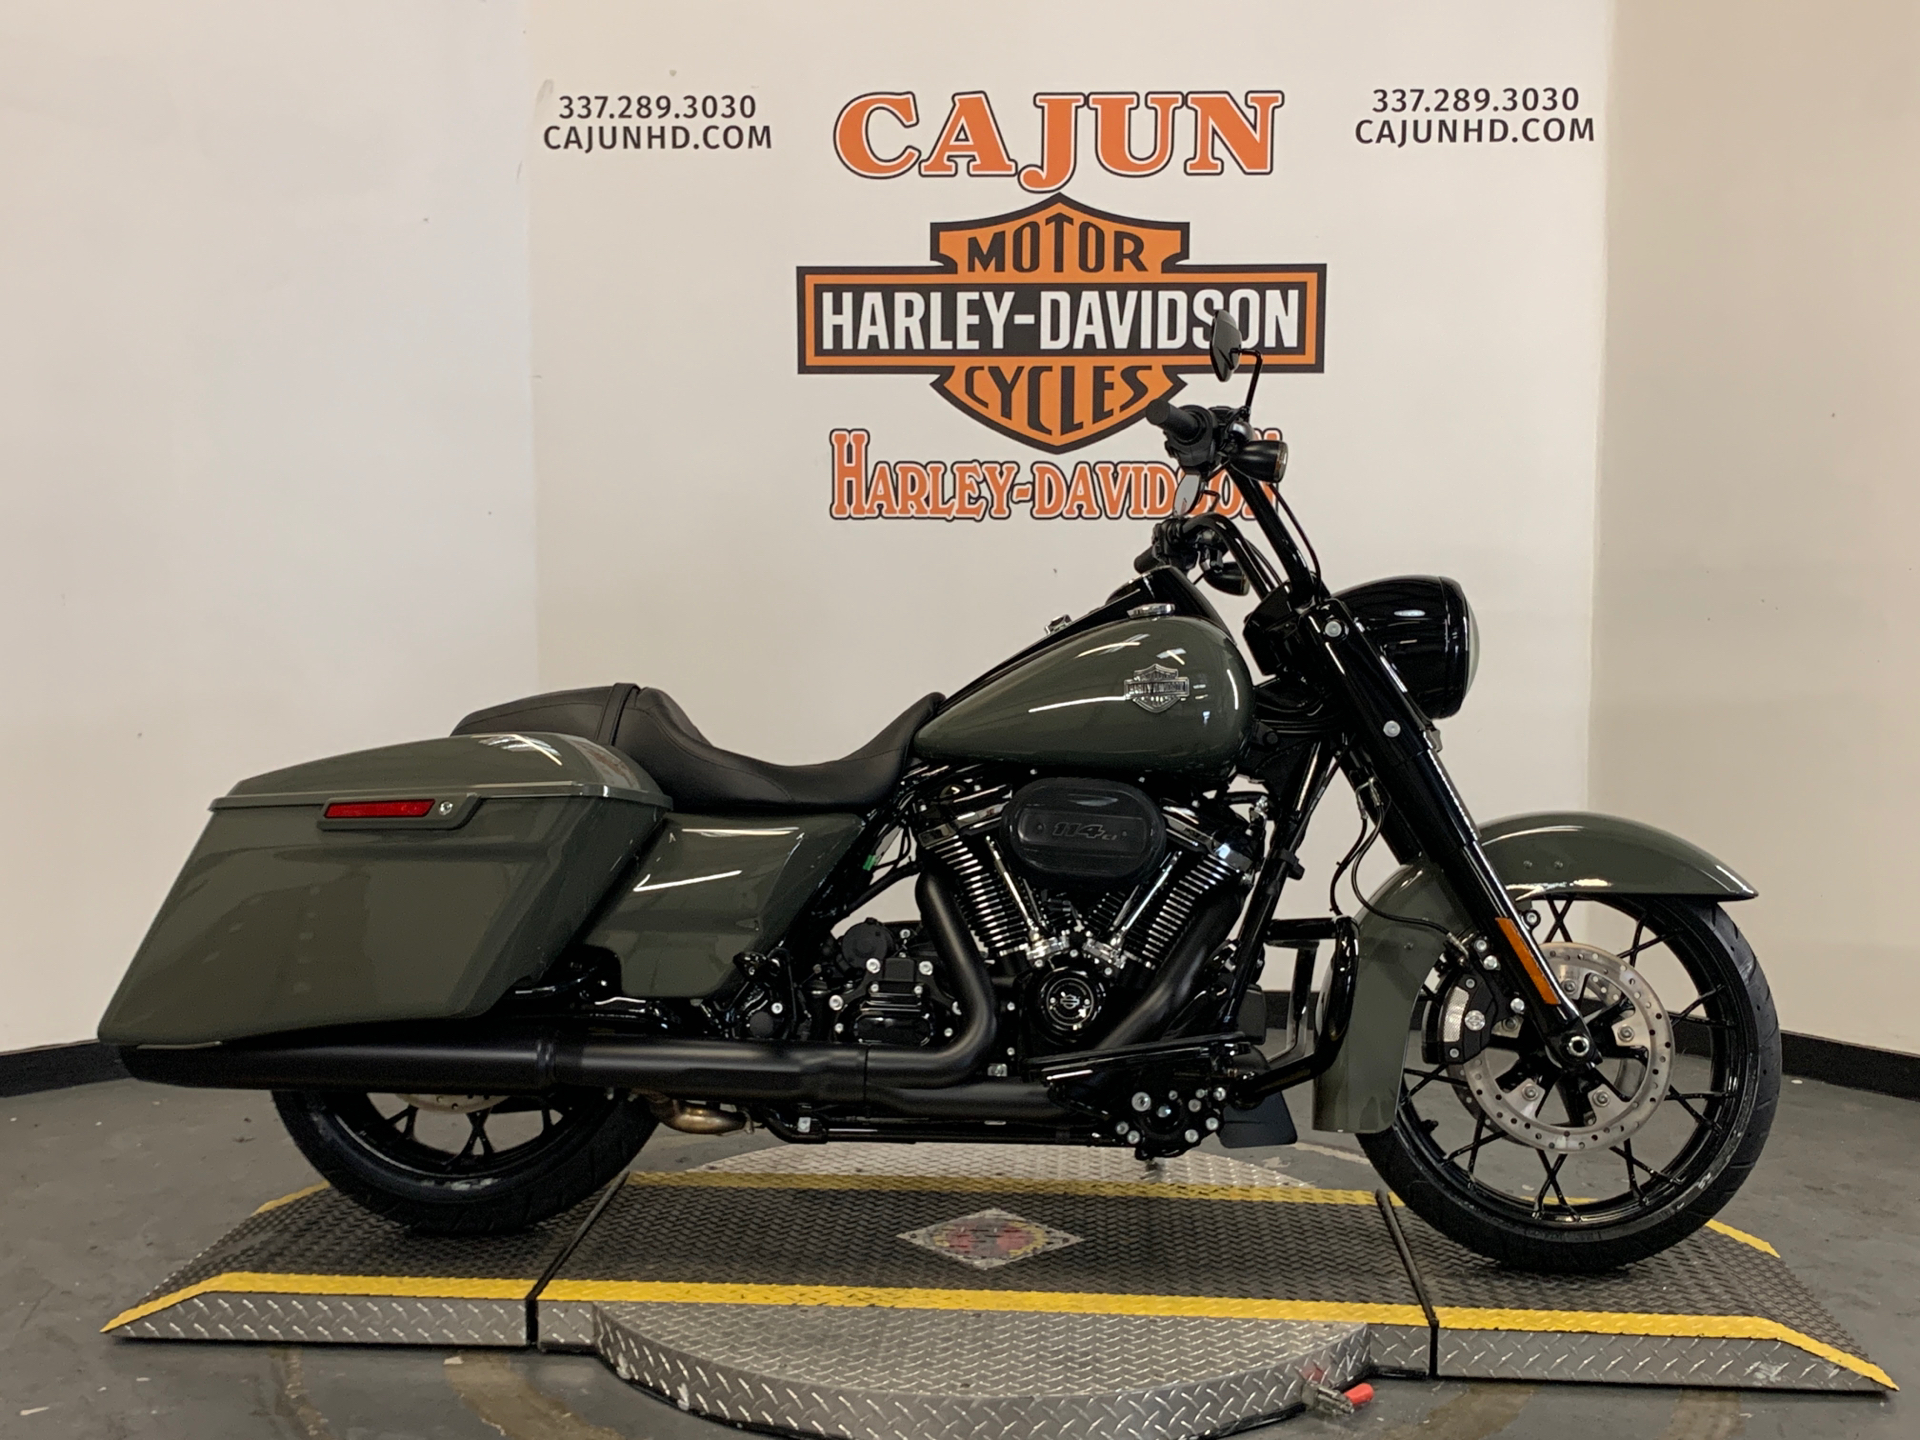 New 2021 Harley Davidson Road King Special Deadwood Green Motorcycles In Scott La 631670